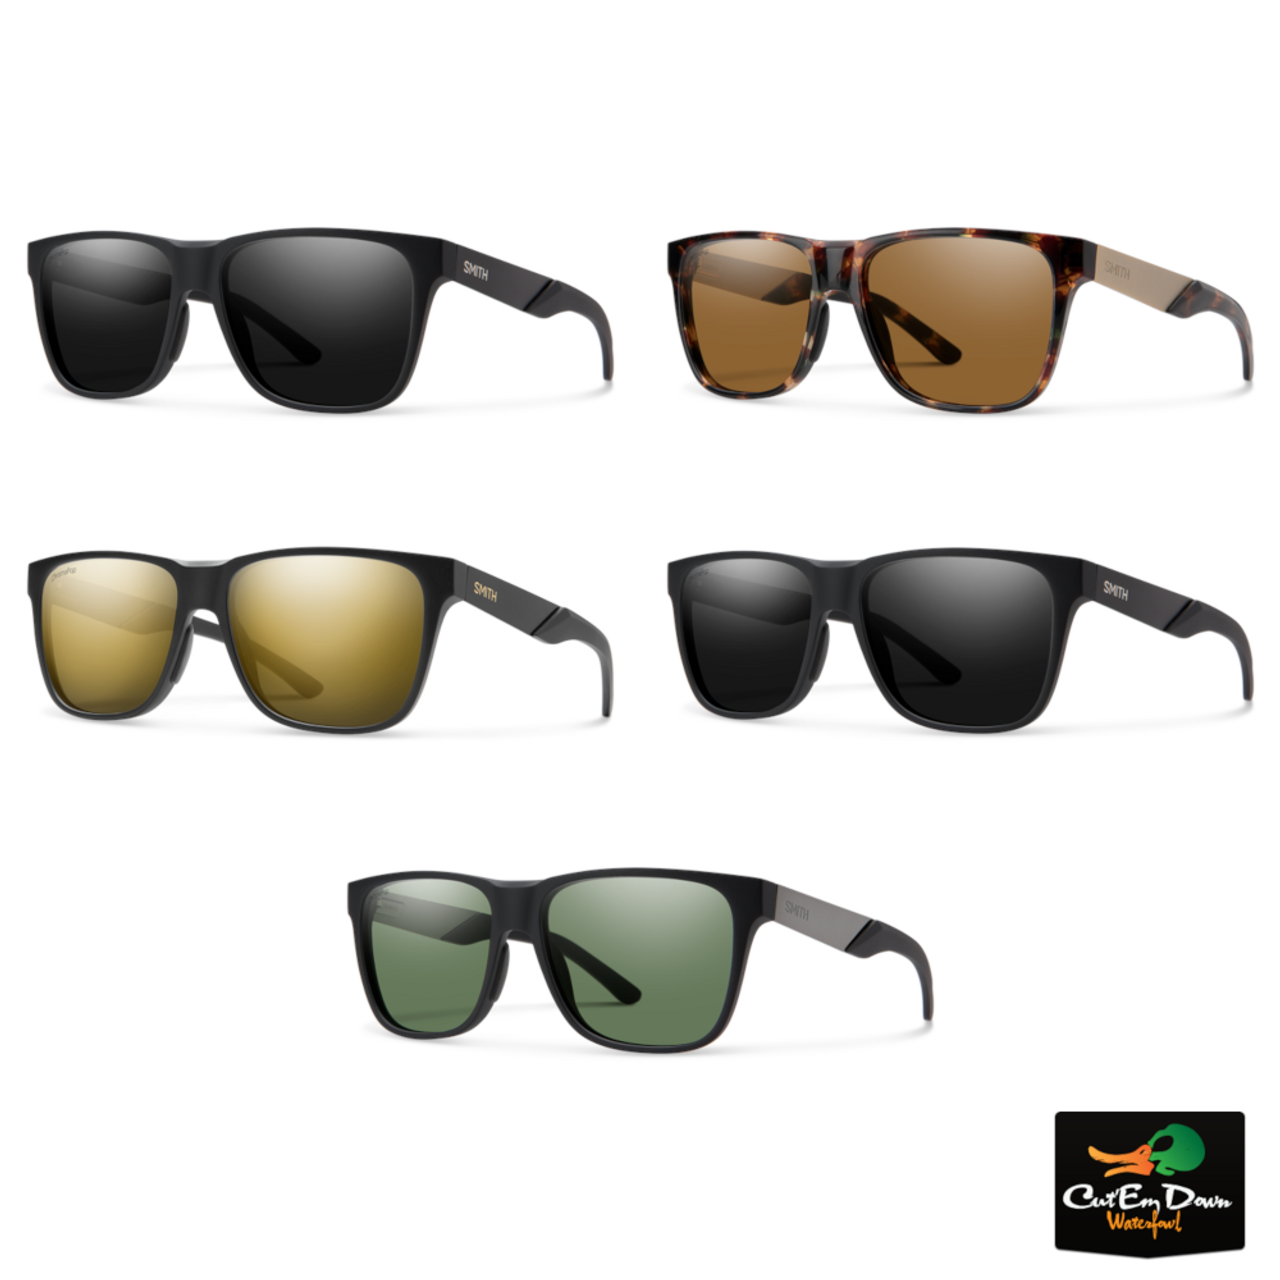 Smith Lowdown Steel Polarized Sunglasses - Matte Black Gold/Black Gold